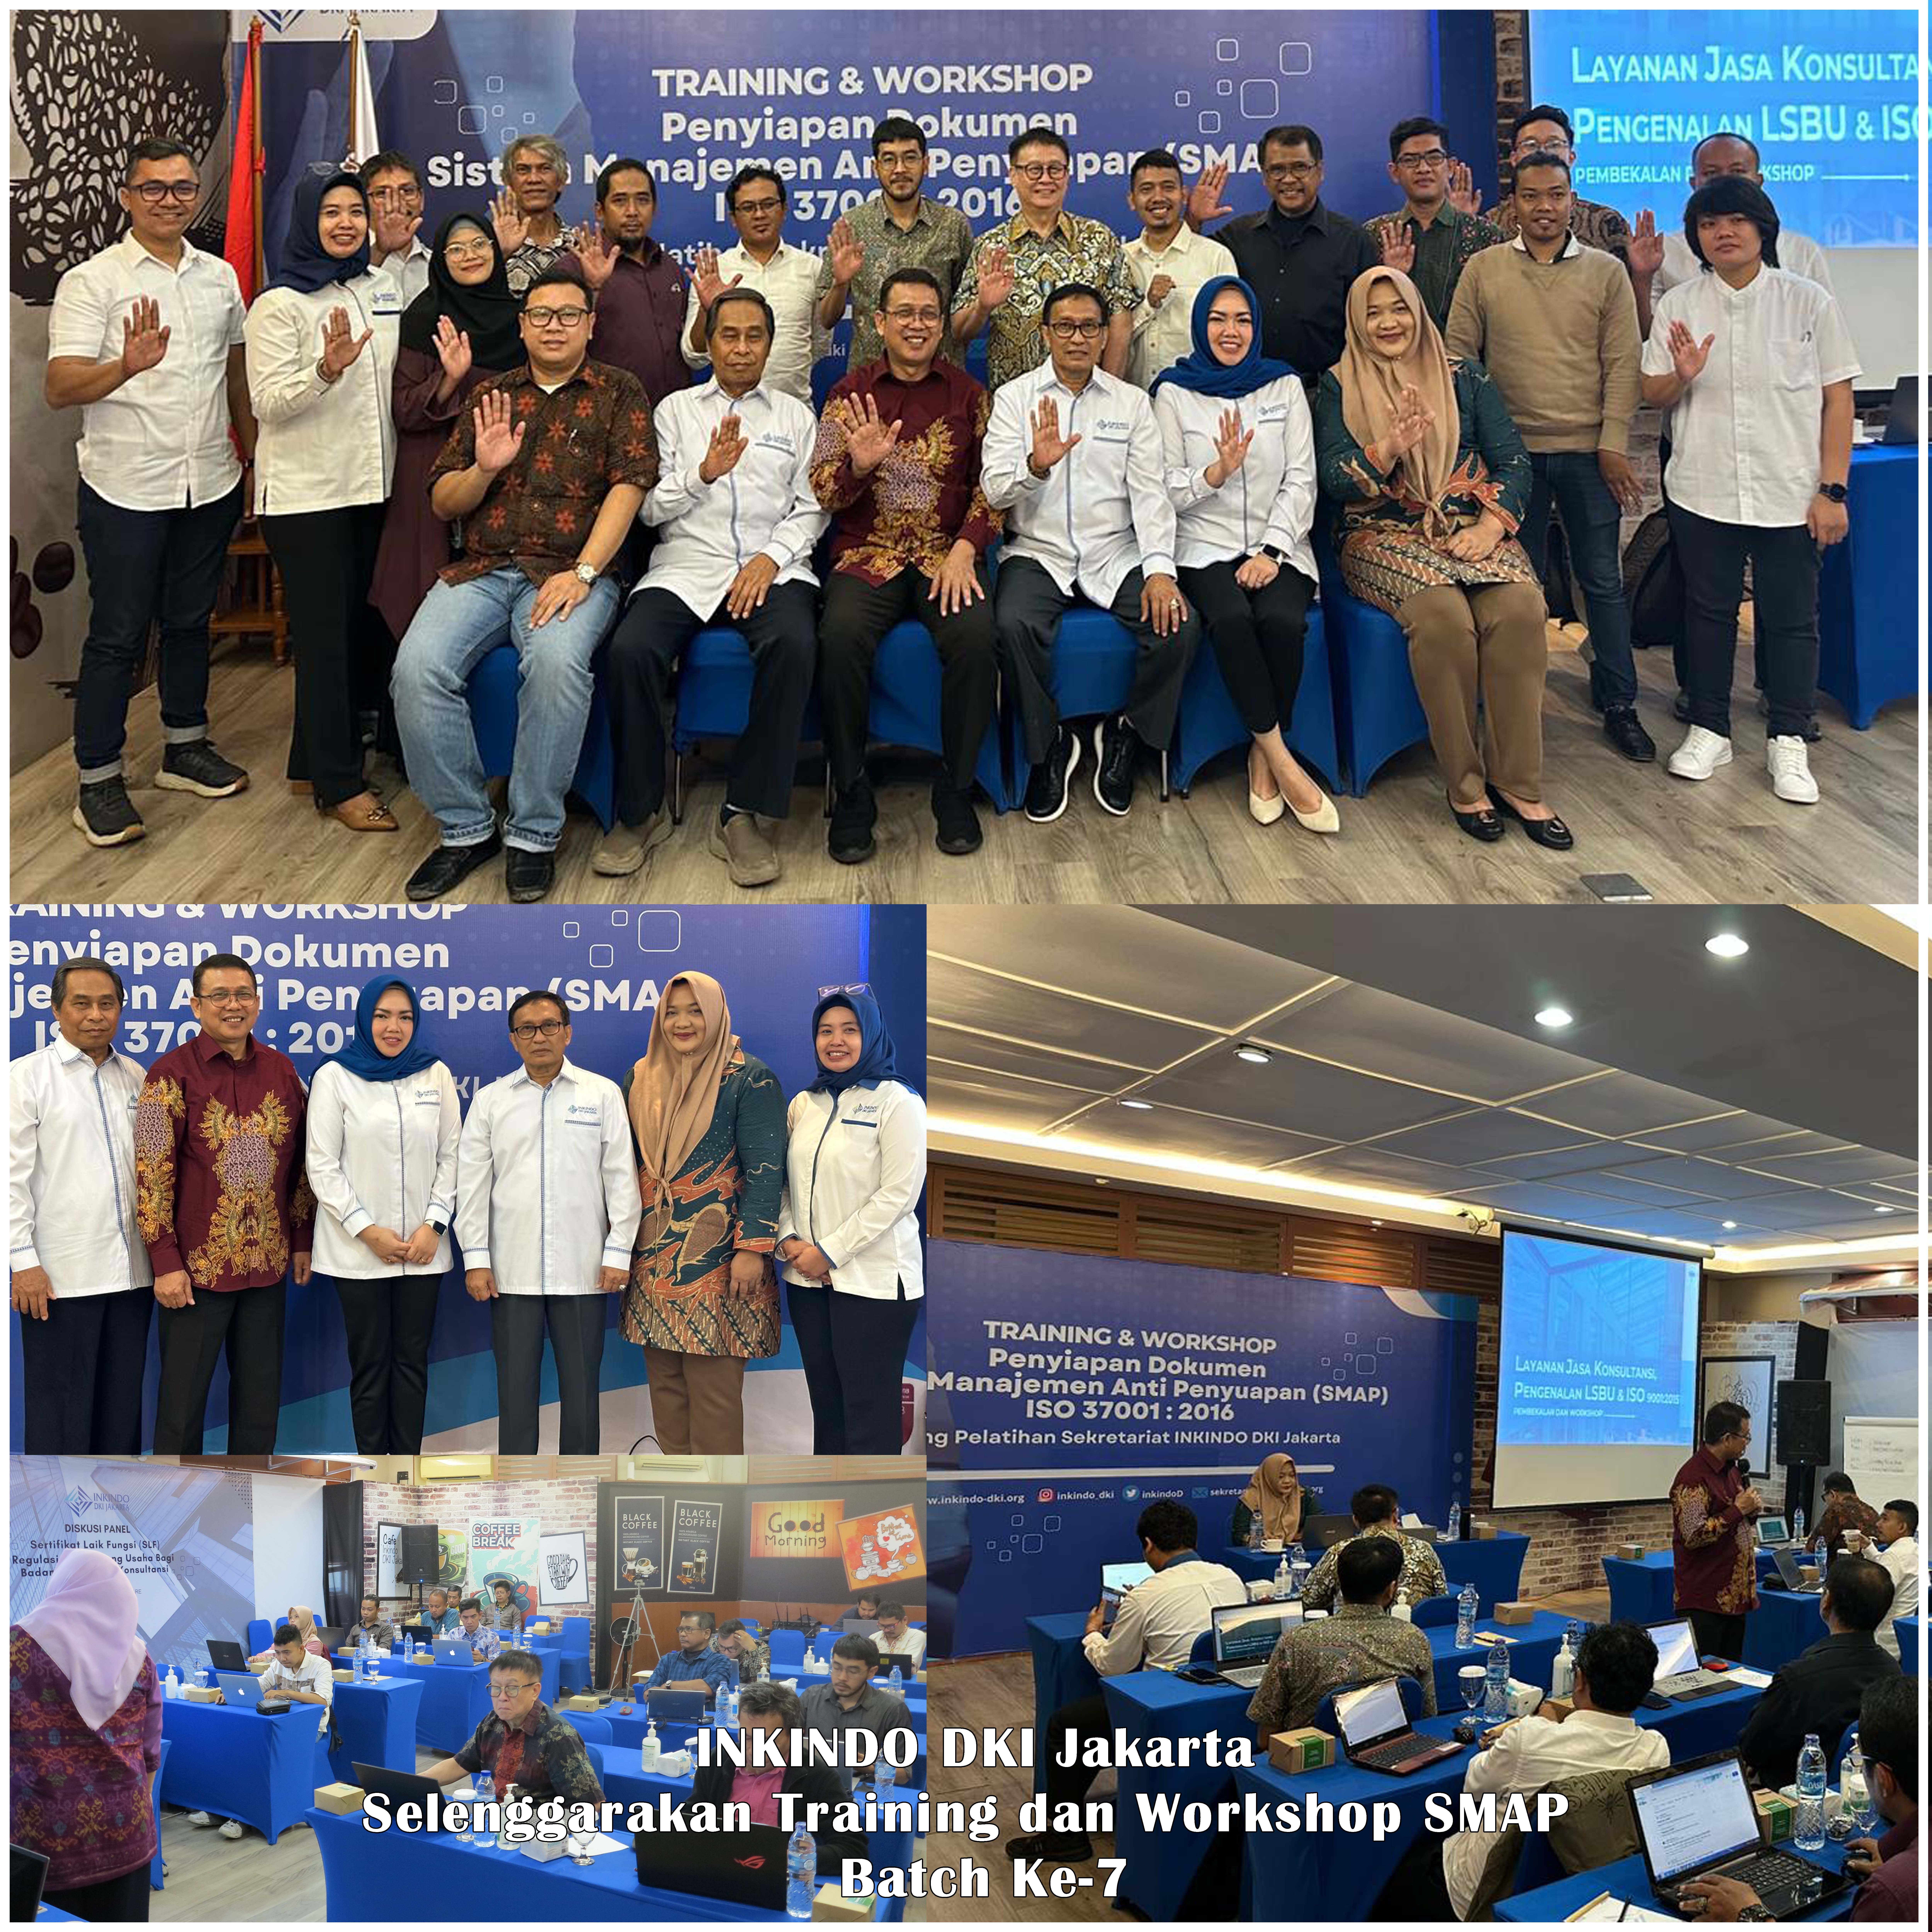 INKINDO DKI Jakarta Selenggarakan Training dan Workshop SMAP Batch Ke-7